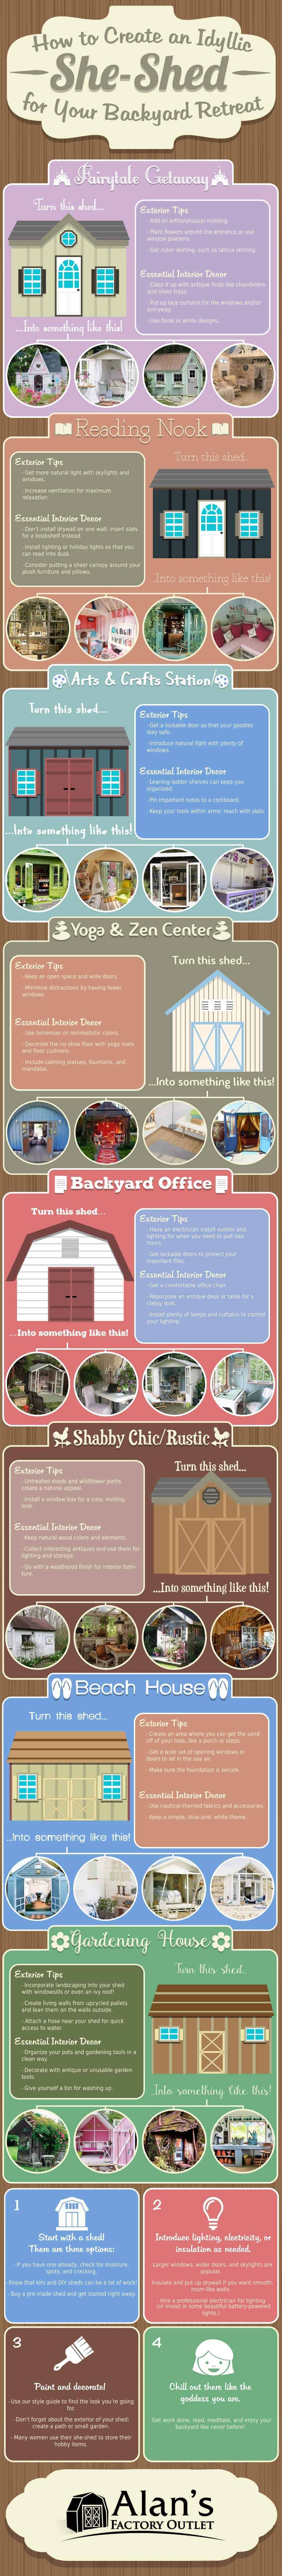 How to Create an Idyllic She-Shed for Your Backyard Retreat